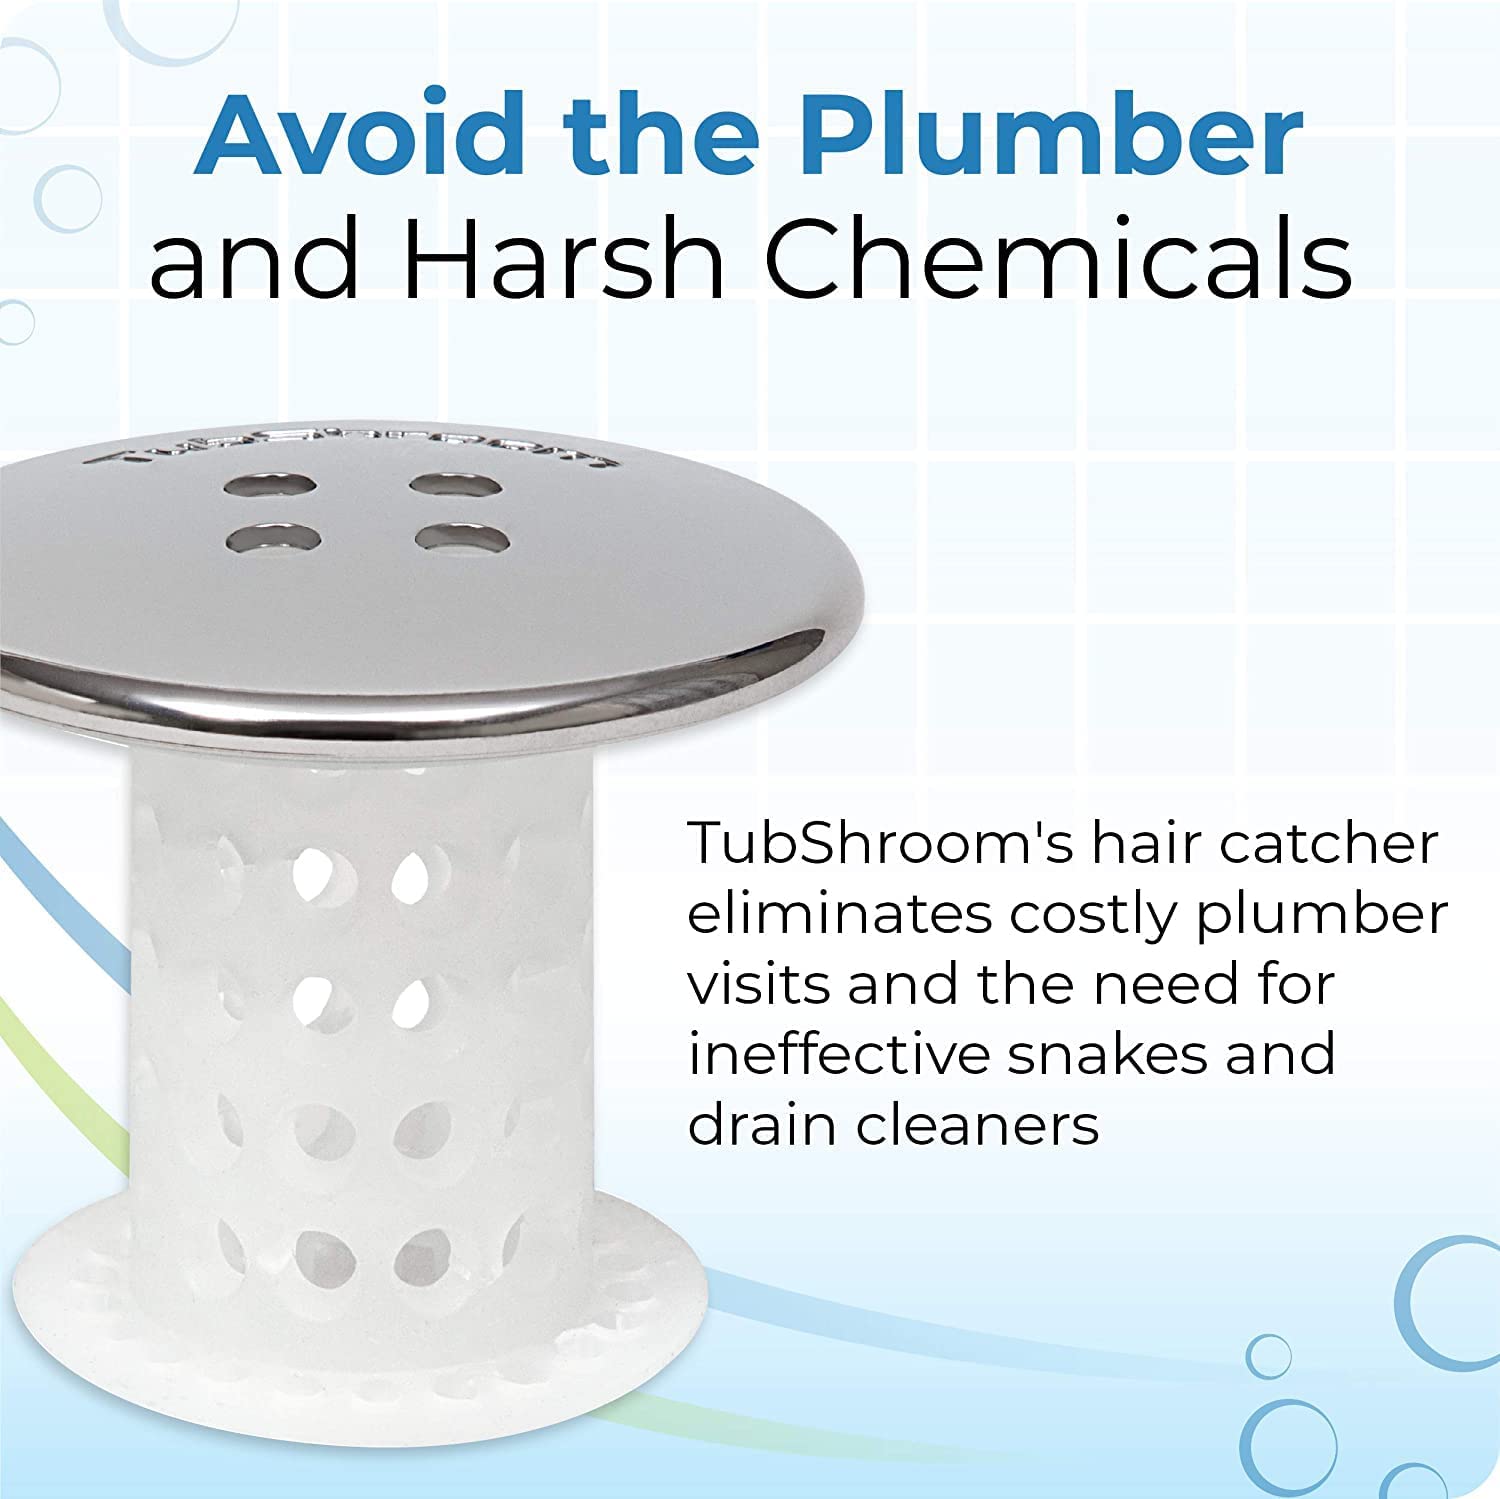 TubShroom Tub Drain Hair Catcher, Chrome – Drain Protector and Hair Catcher for Bathroom Drains, Fits 1.5” – 1.75” Bathtub and Shower Drains